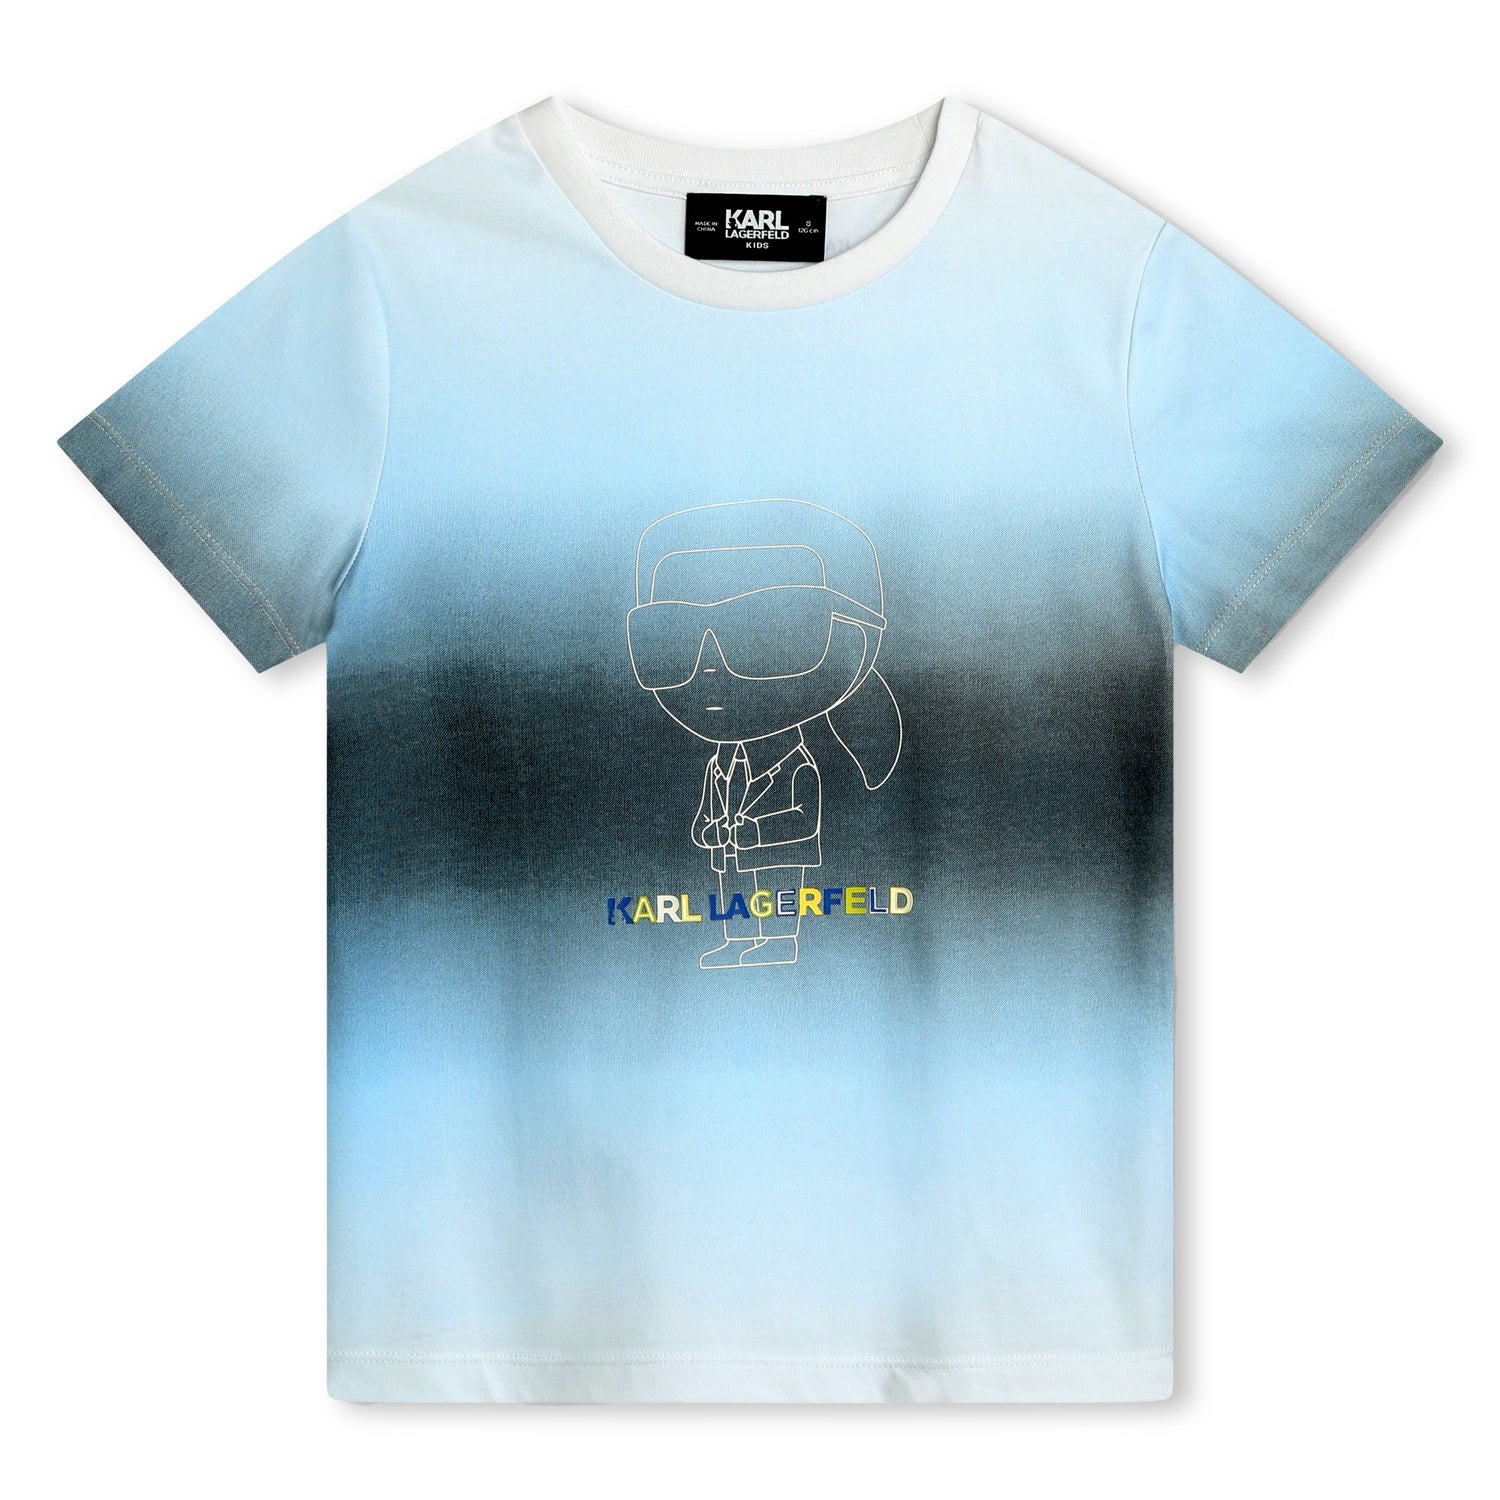 Karl Lagerfeld White and Blue Gradient Logo Tee Shirt